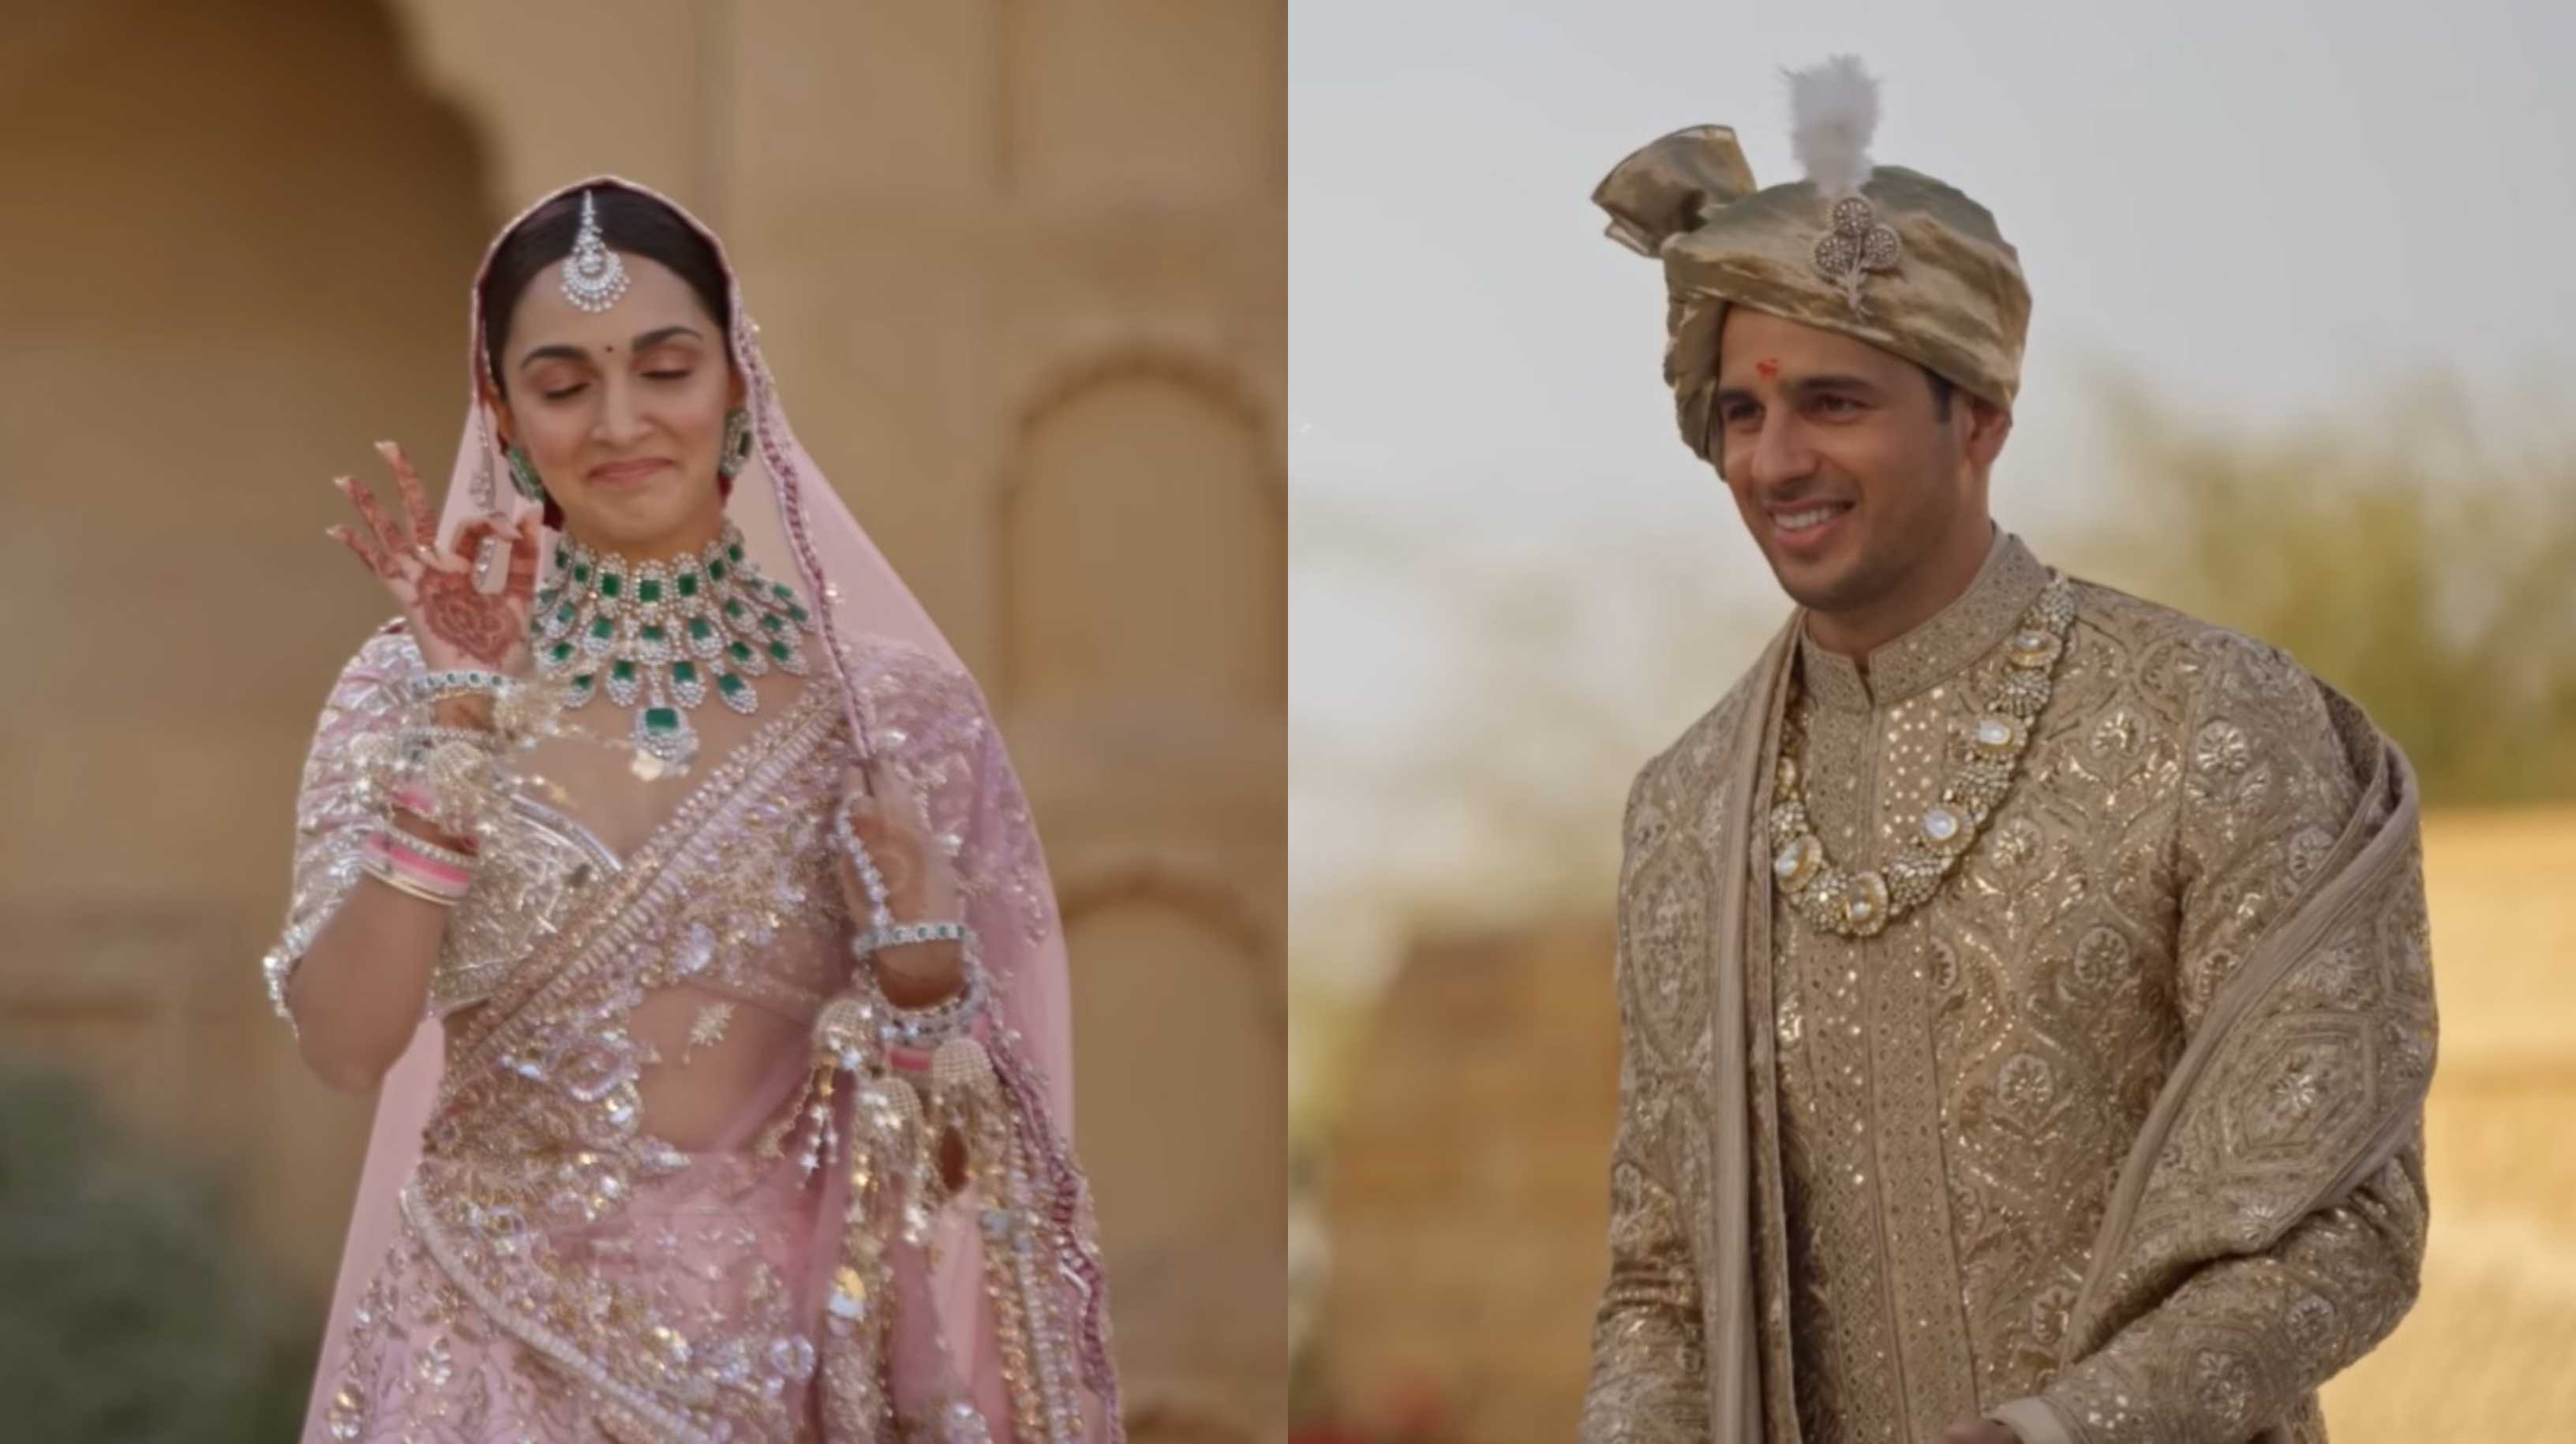 ‘I was really emotional’: Kiara Advani reveals how she felt on seeing husband Sidharth Malhotra on their wedding day